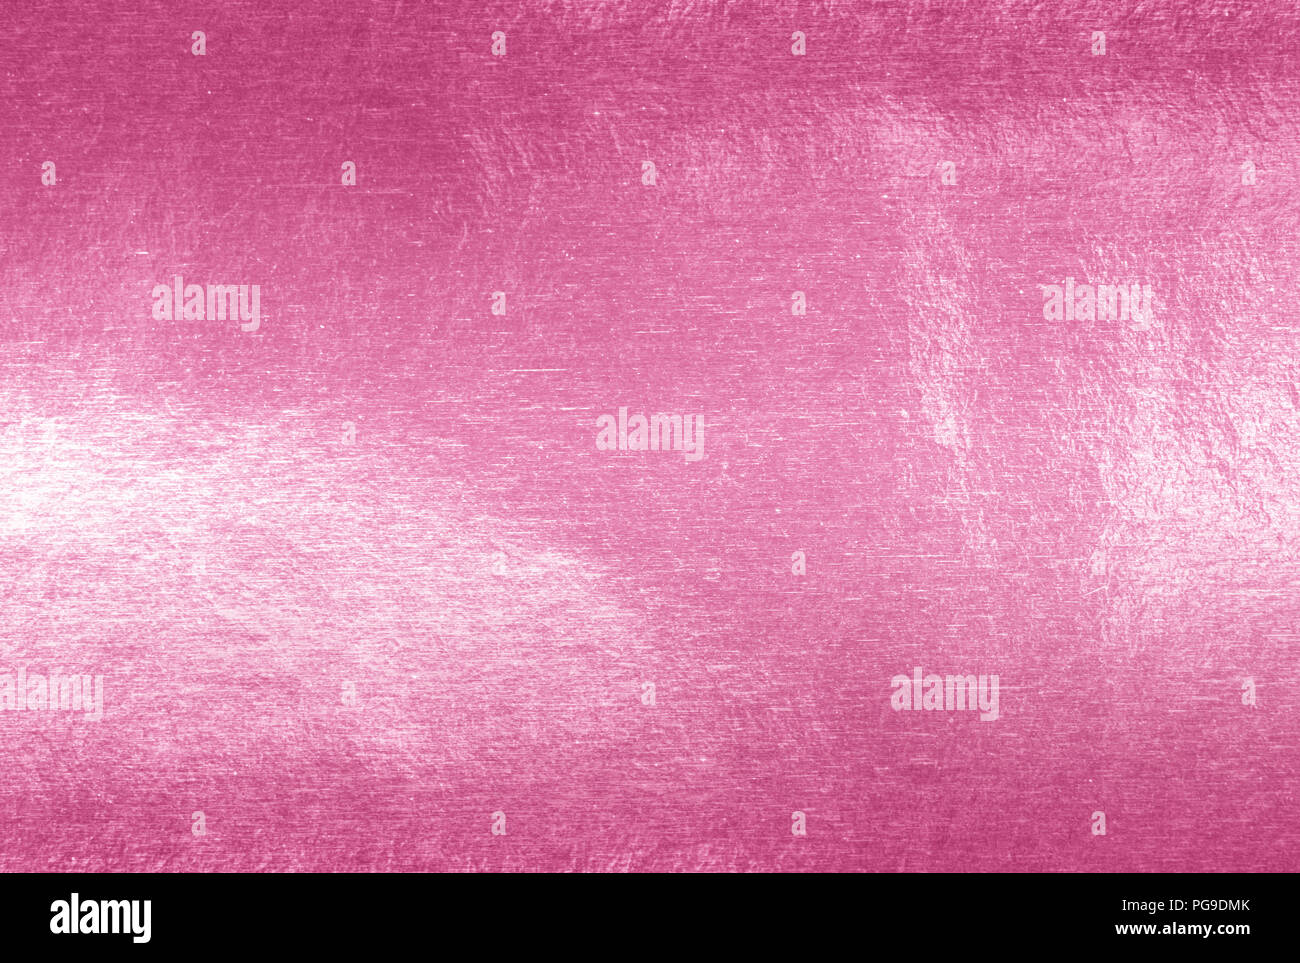 Feuille d'Or Rose texture background Abstract feuille métallique rouge Banque D'Images